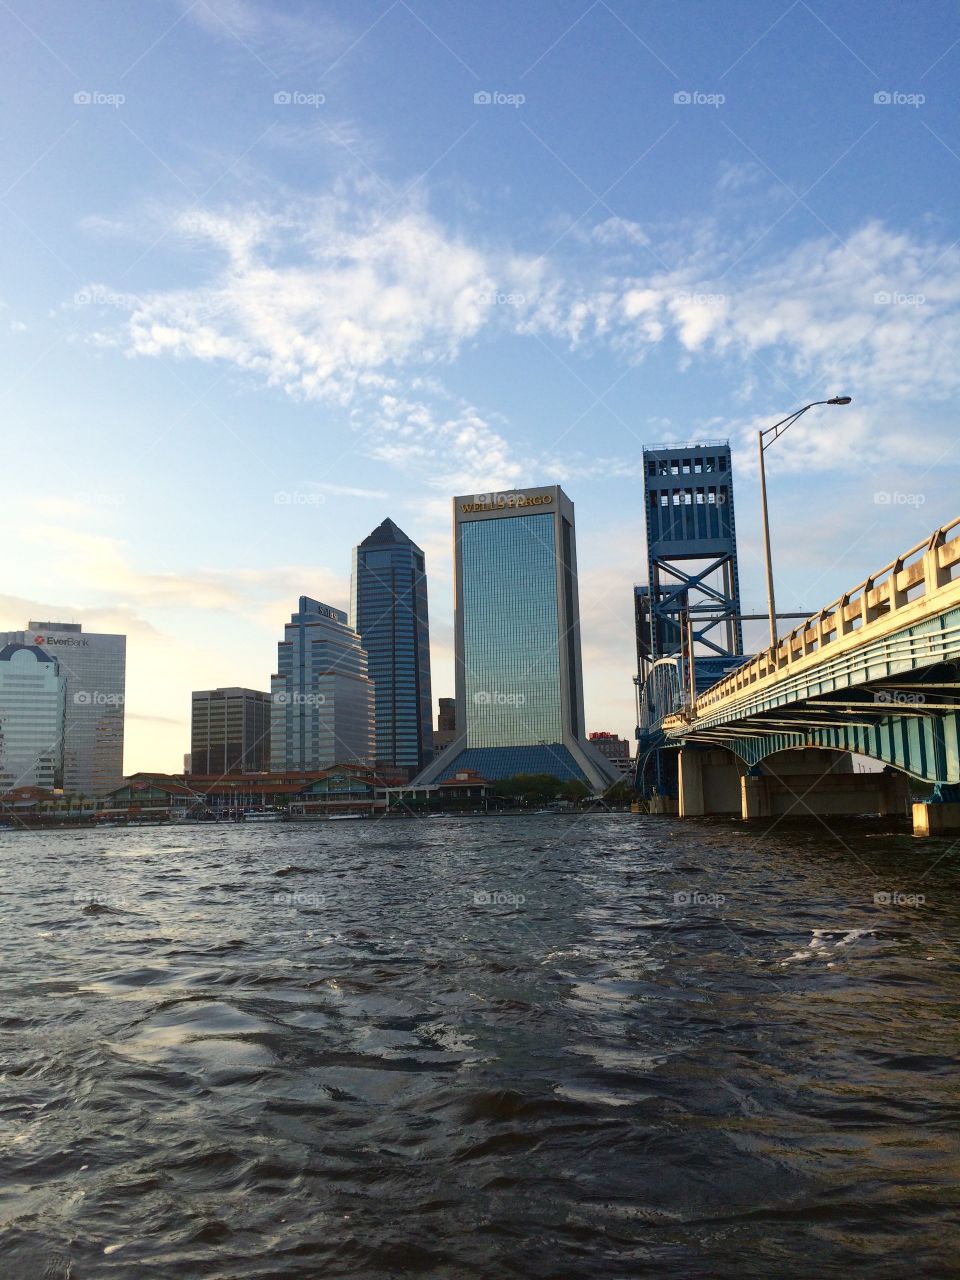 Jax sunset. Walking under the bridge at sunset in Jacksonville, FL. 